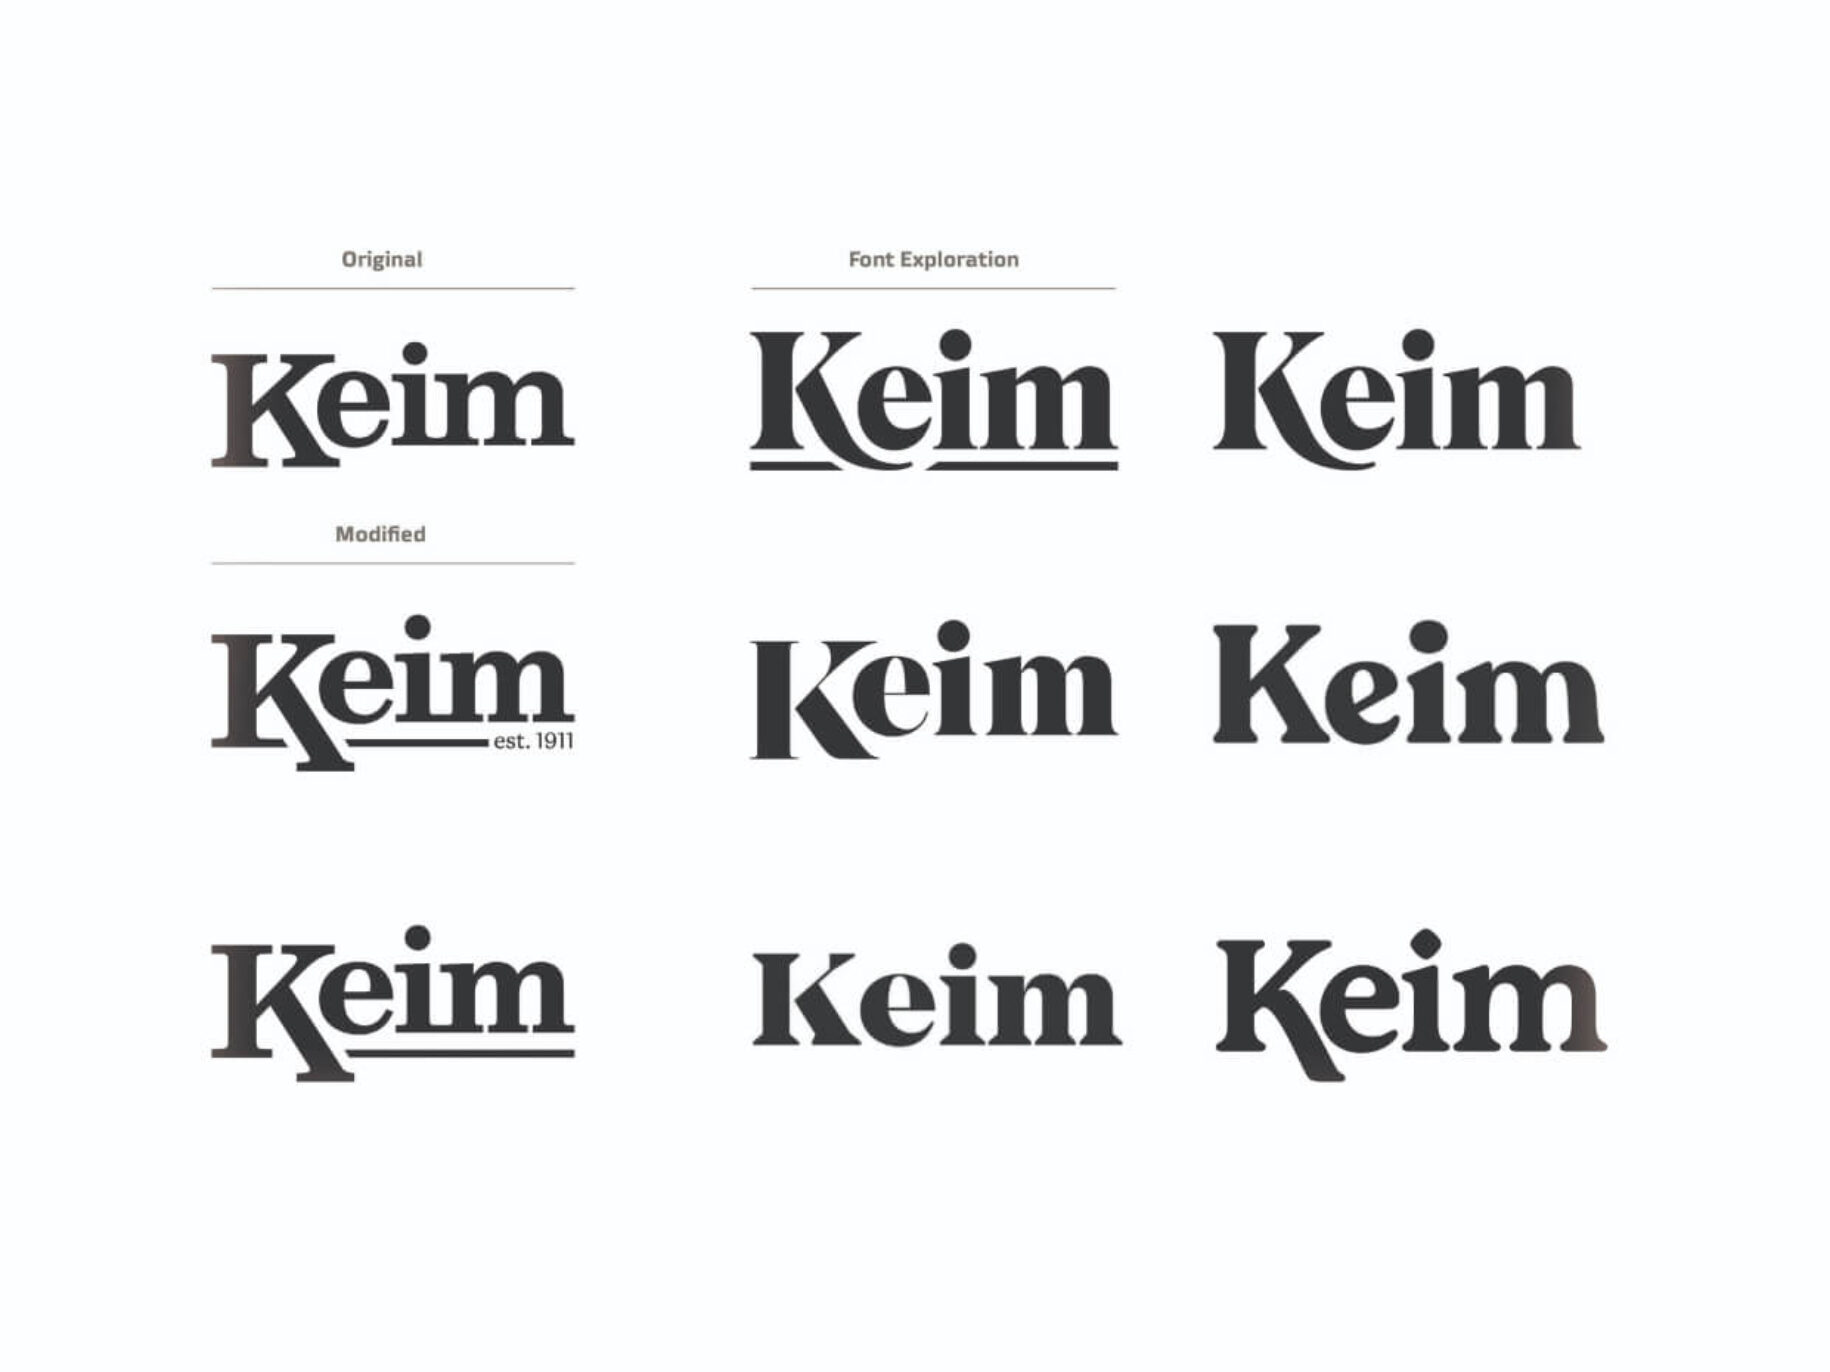 Keim logo concepts